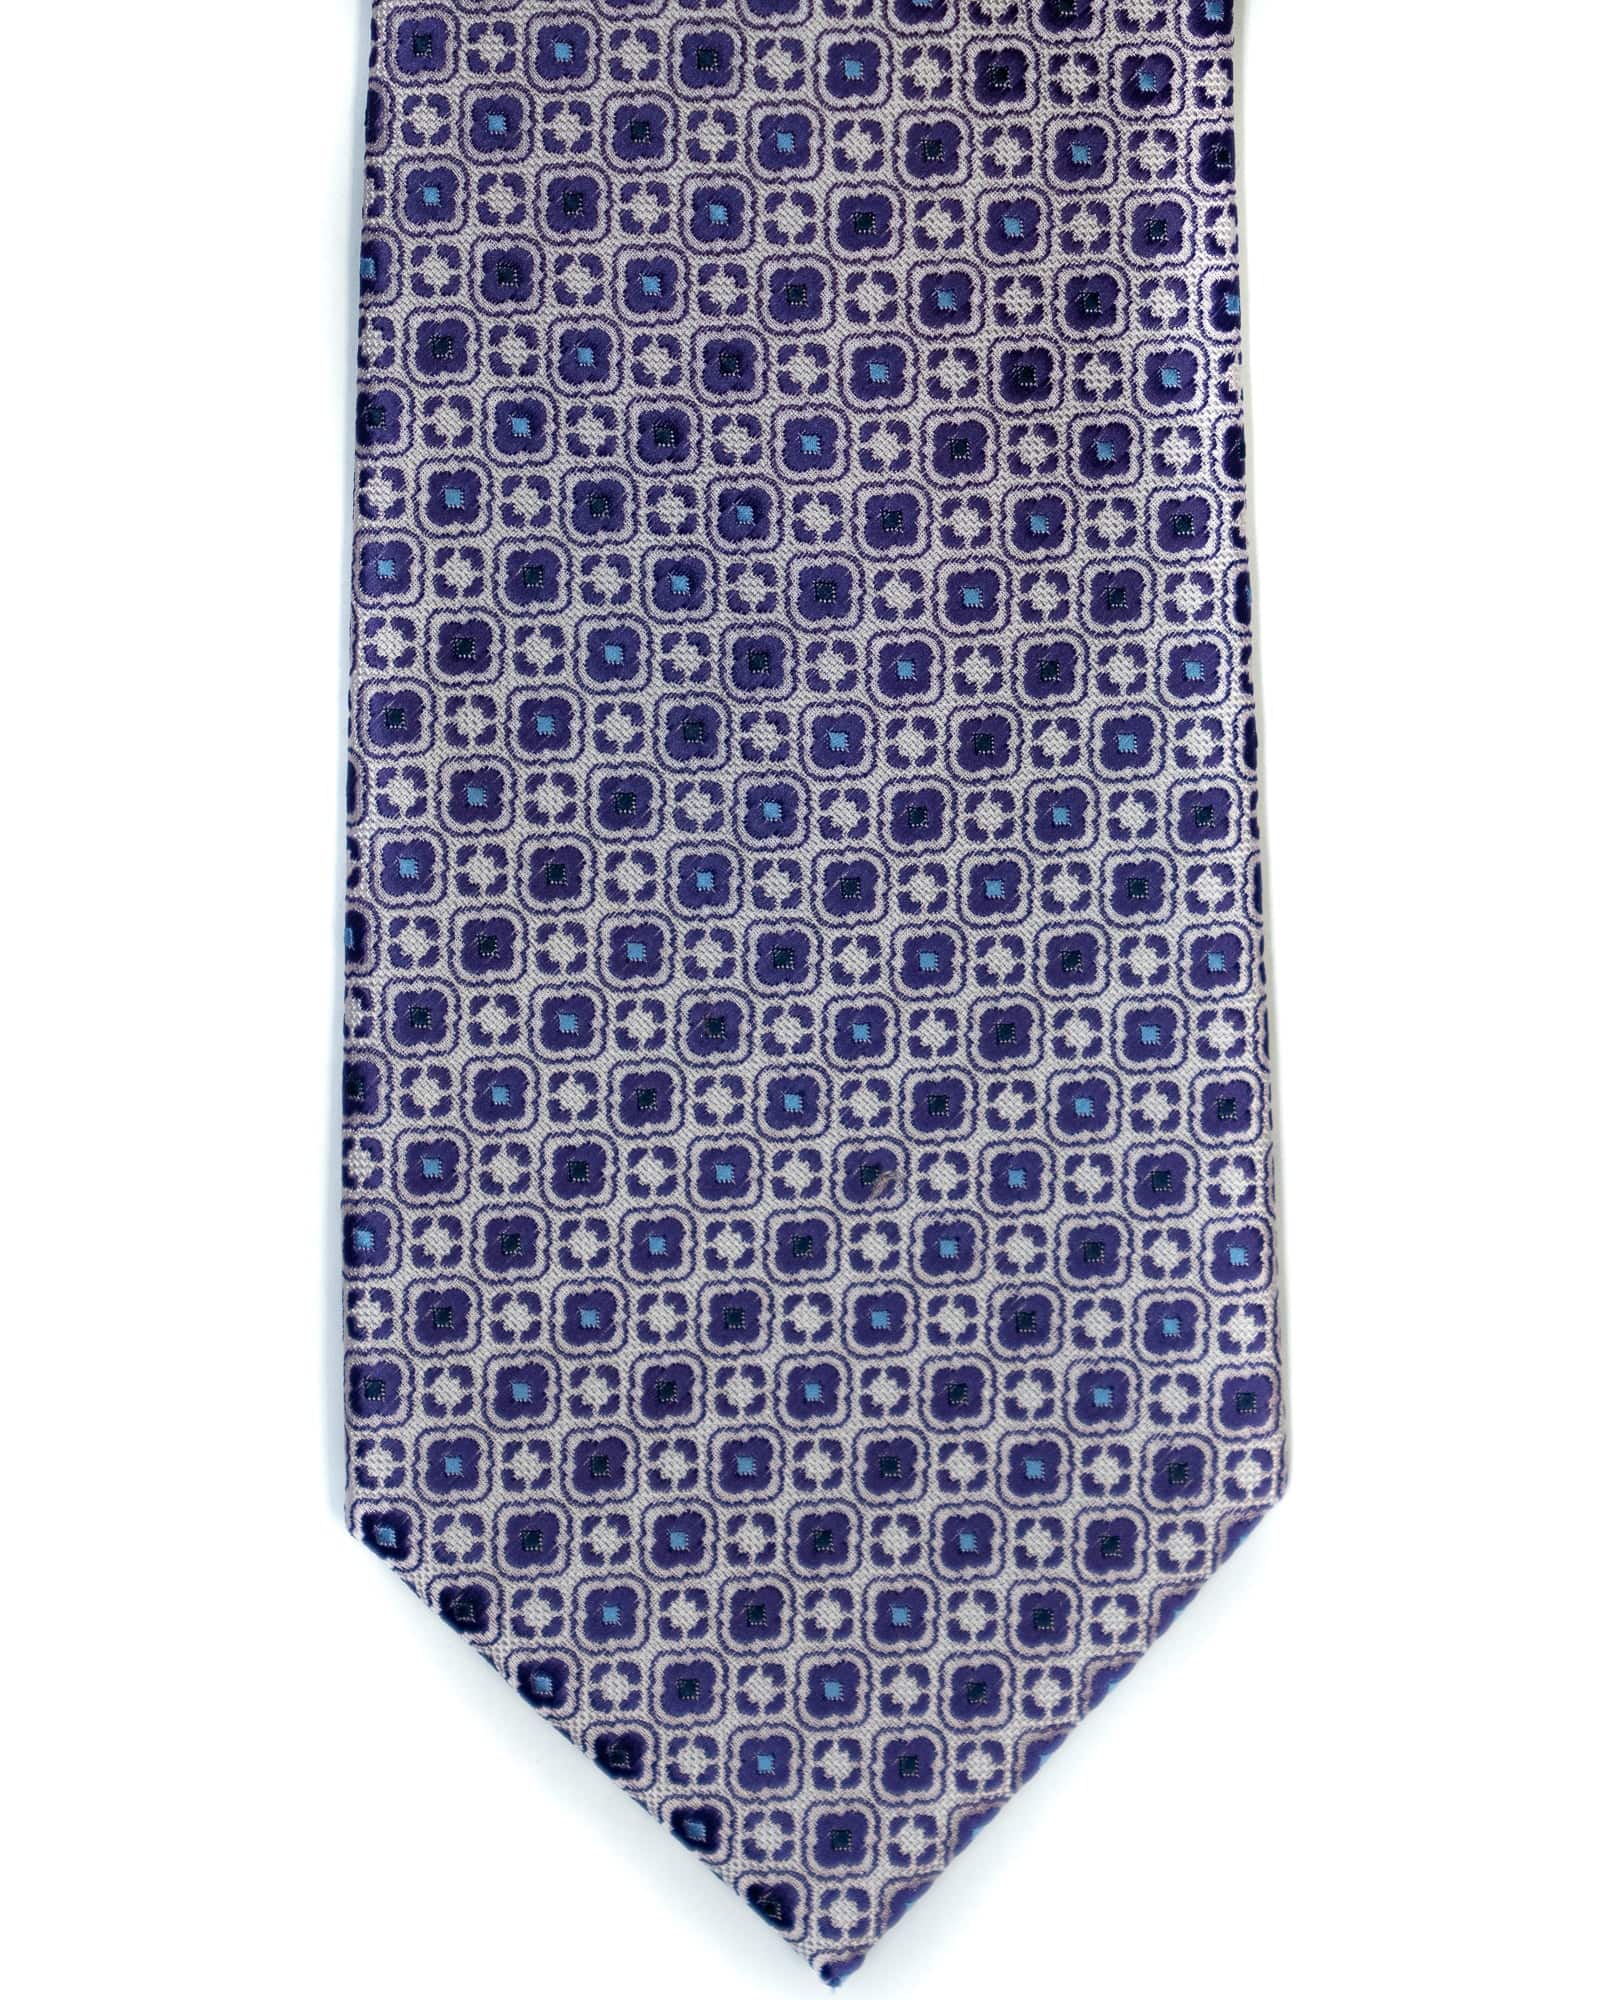 Imani Uomo Square Tie in Purple with White - Rainwater's Men's Clothing and Tuxedo Rental